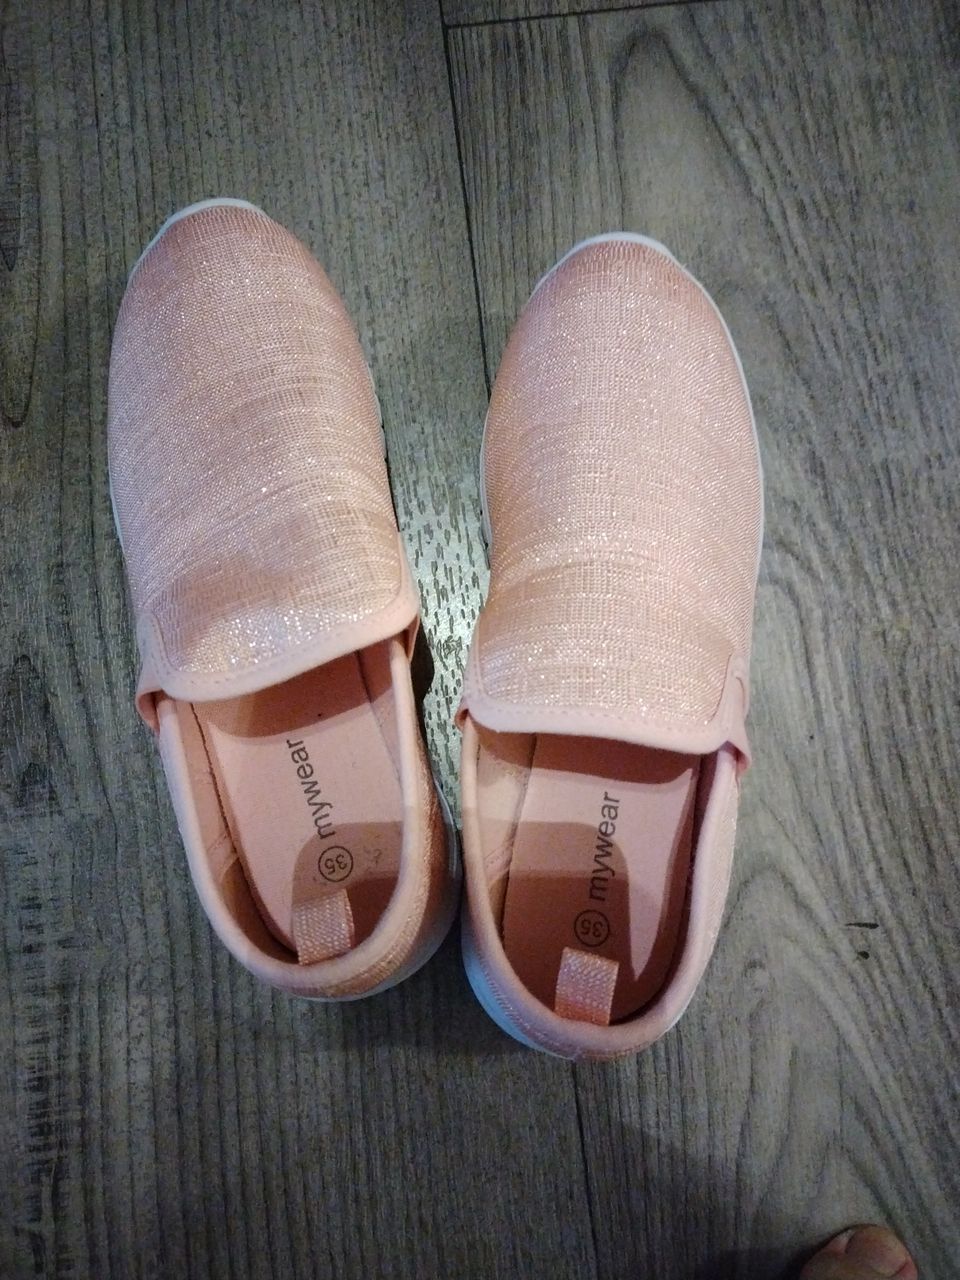 Pinkki kengät koko 35